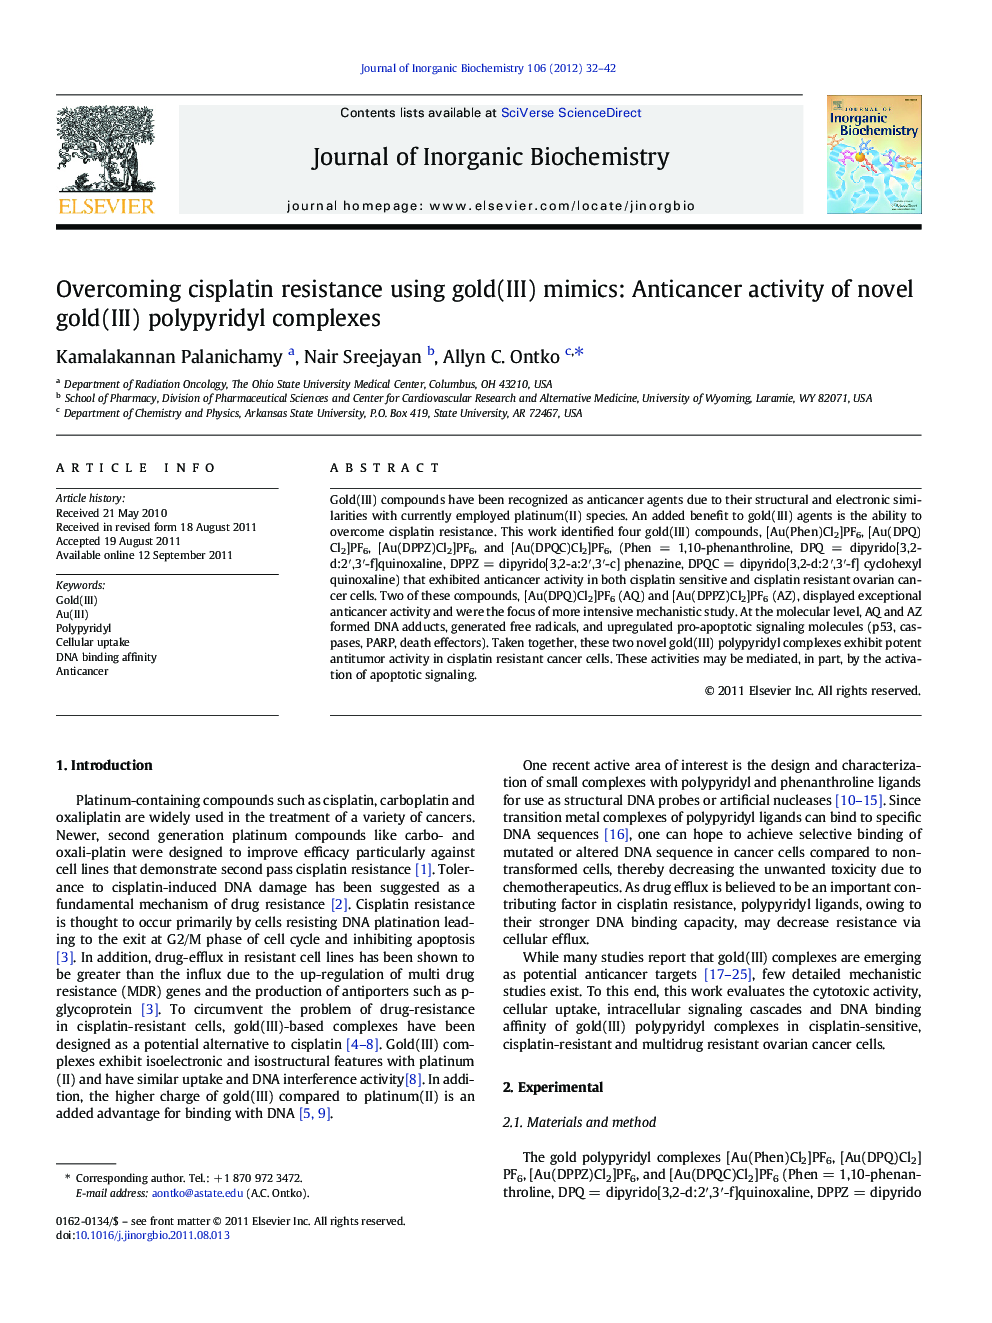 Overcoming cisplatin resistance using gold(III) mimics: Anticancer activity of novel gold(III) polypyridyl complexes